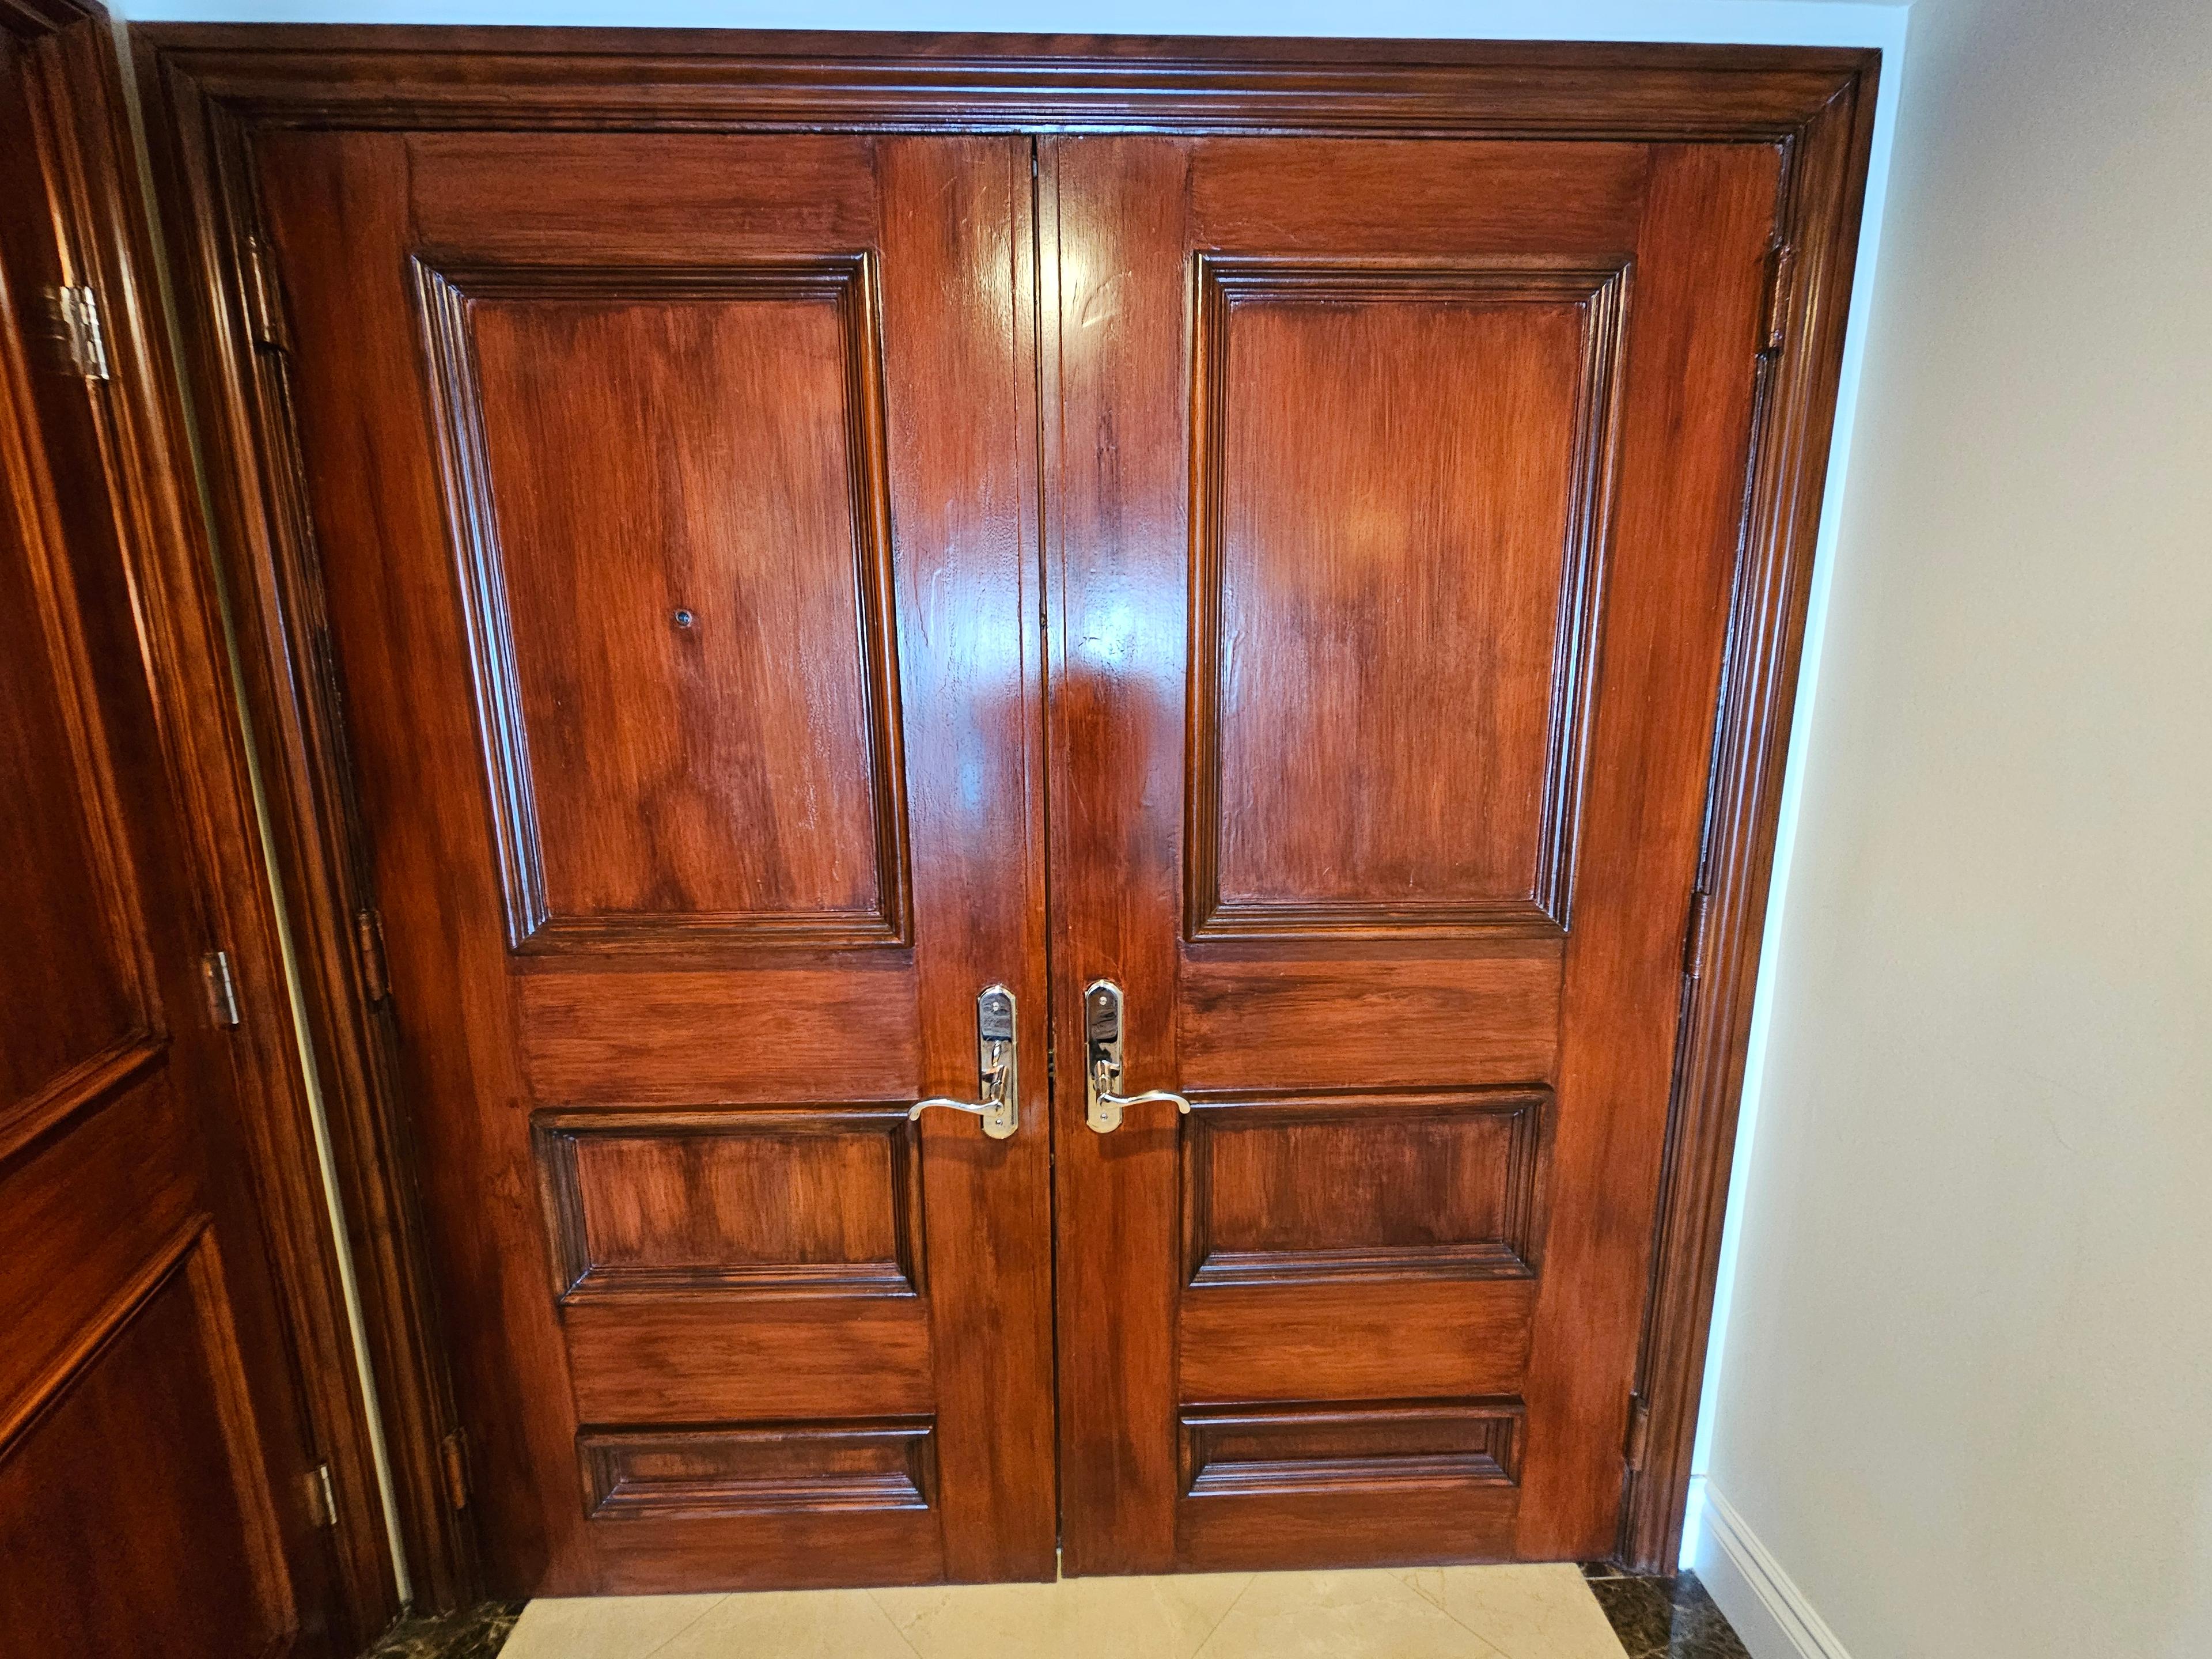 Main Entrance 73" x 83" Double Wood Doors